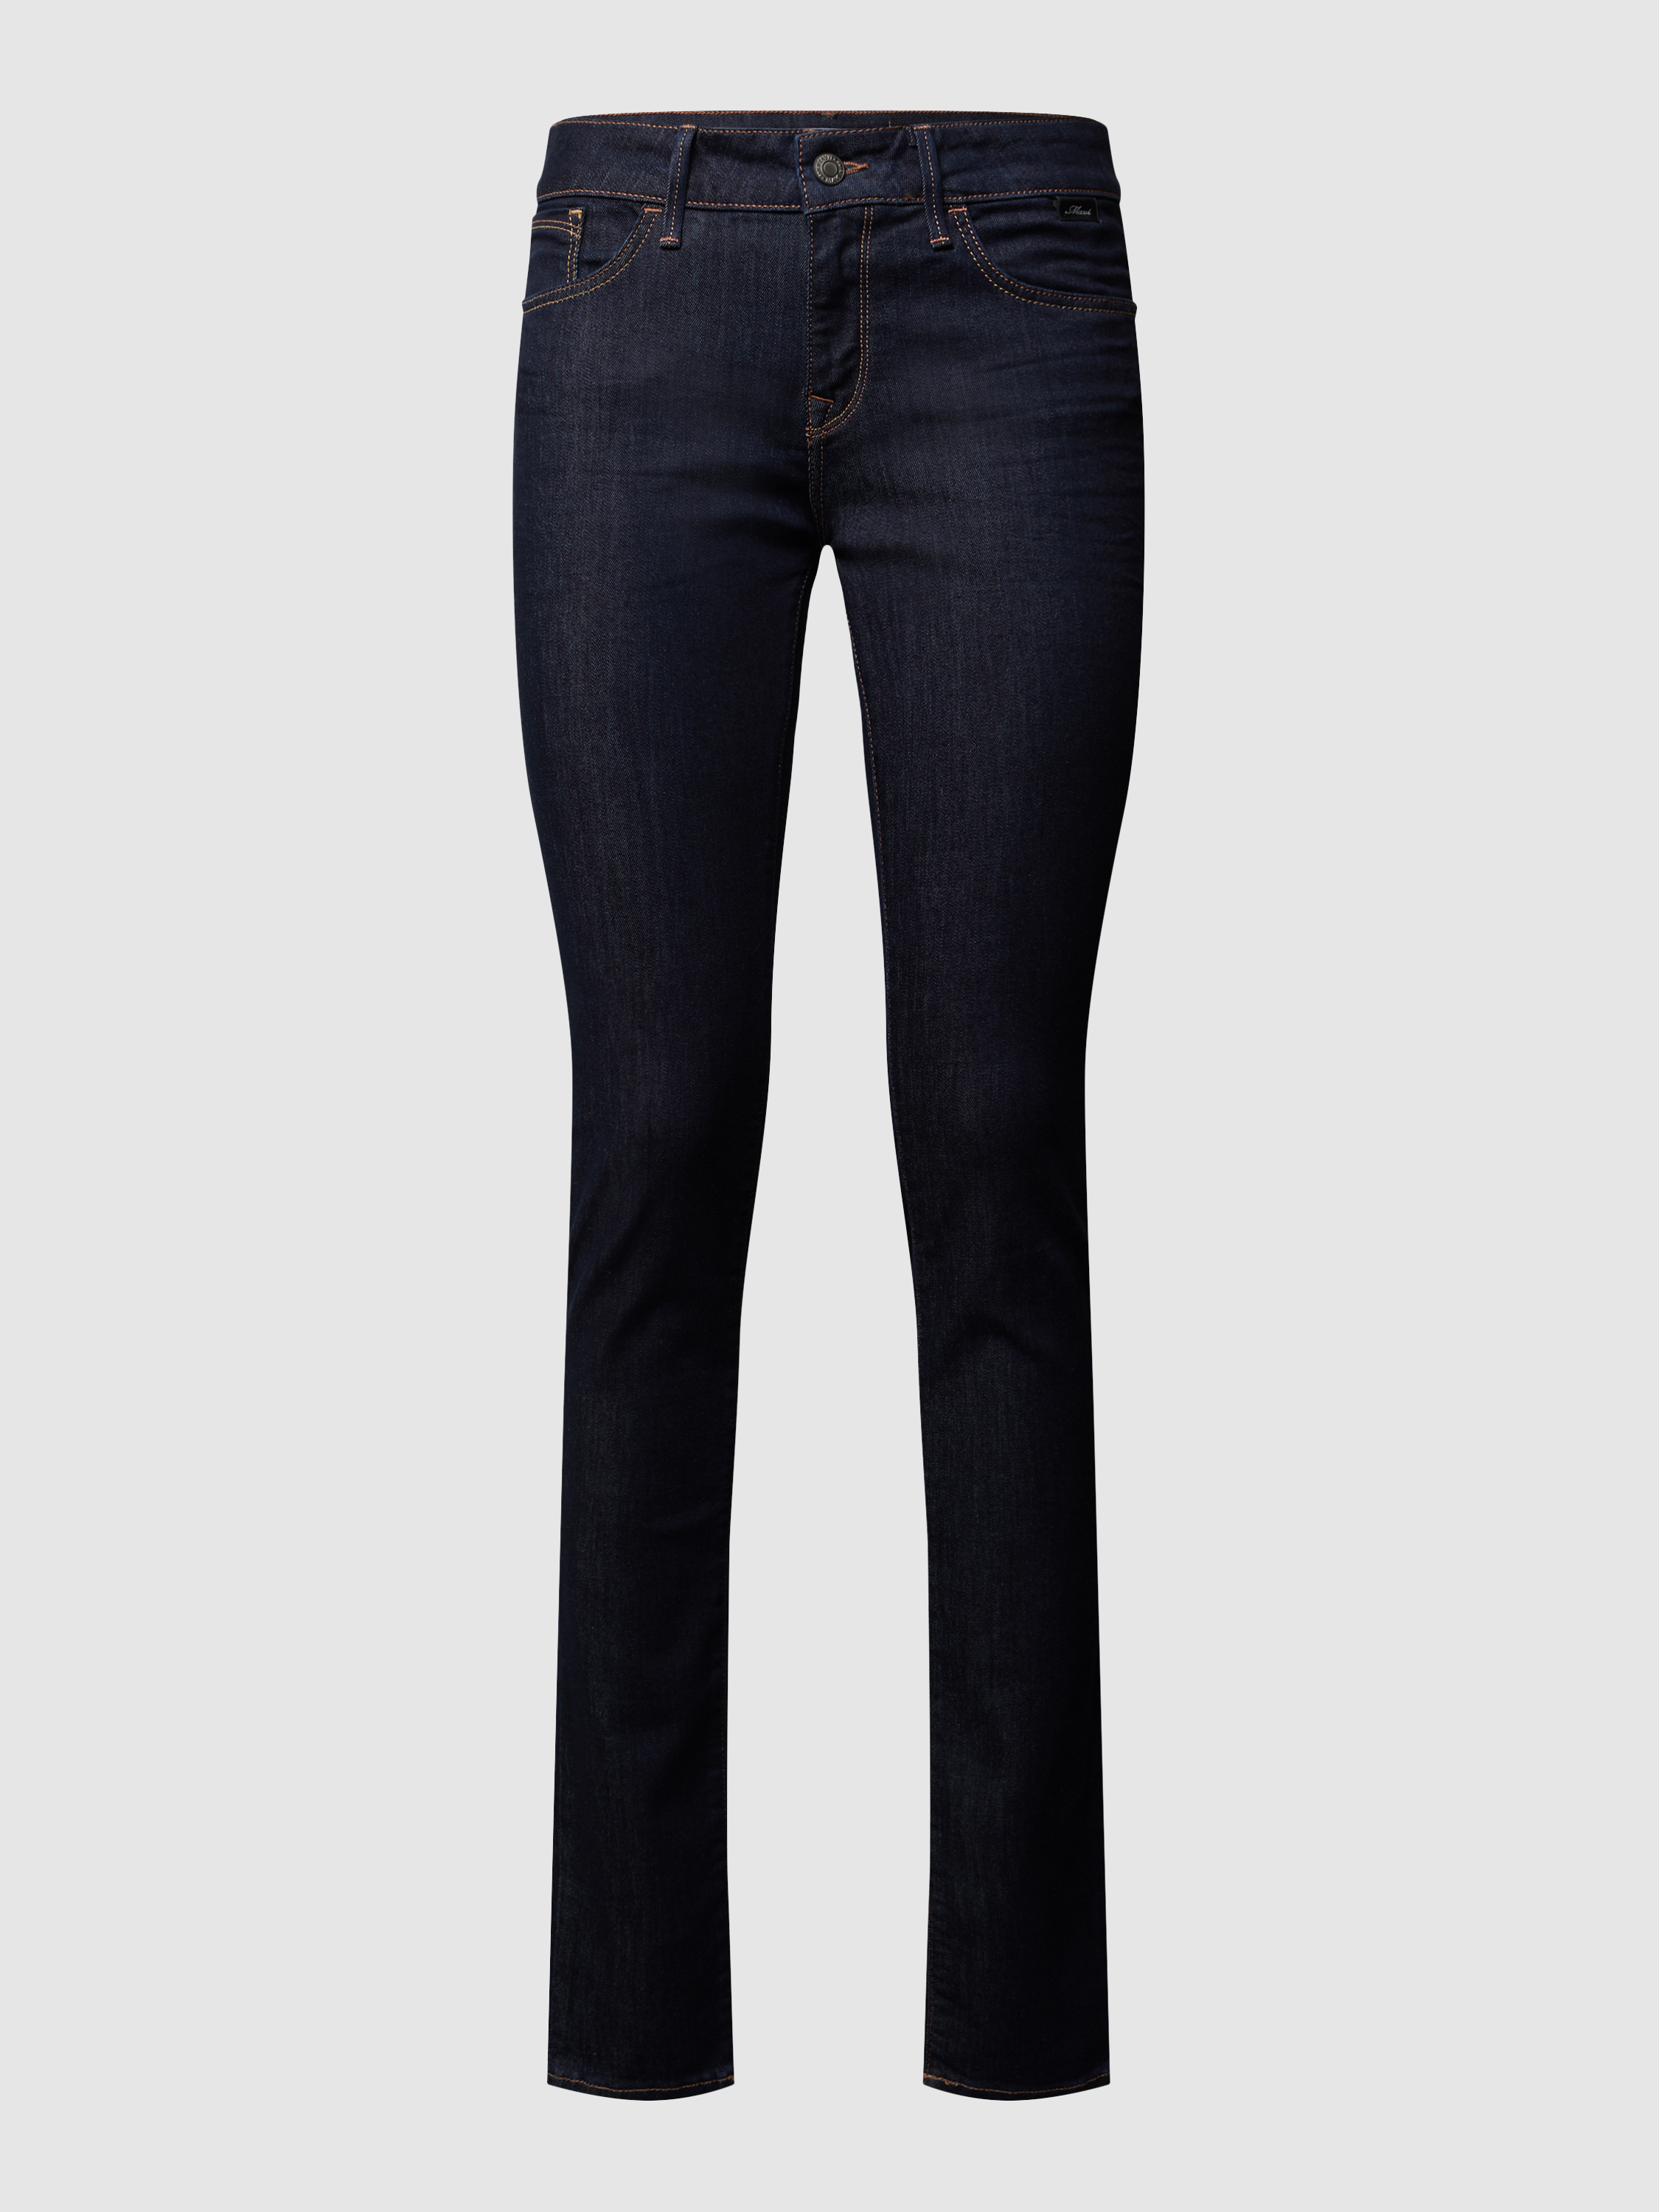 Джинсы женские mavi jeans 1257138 синие 31/32 (доставка из-за рубежа)